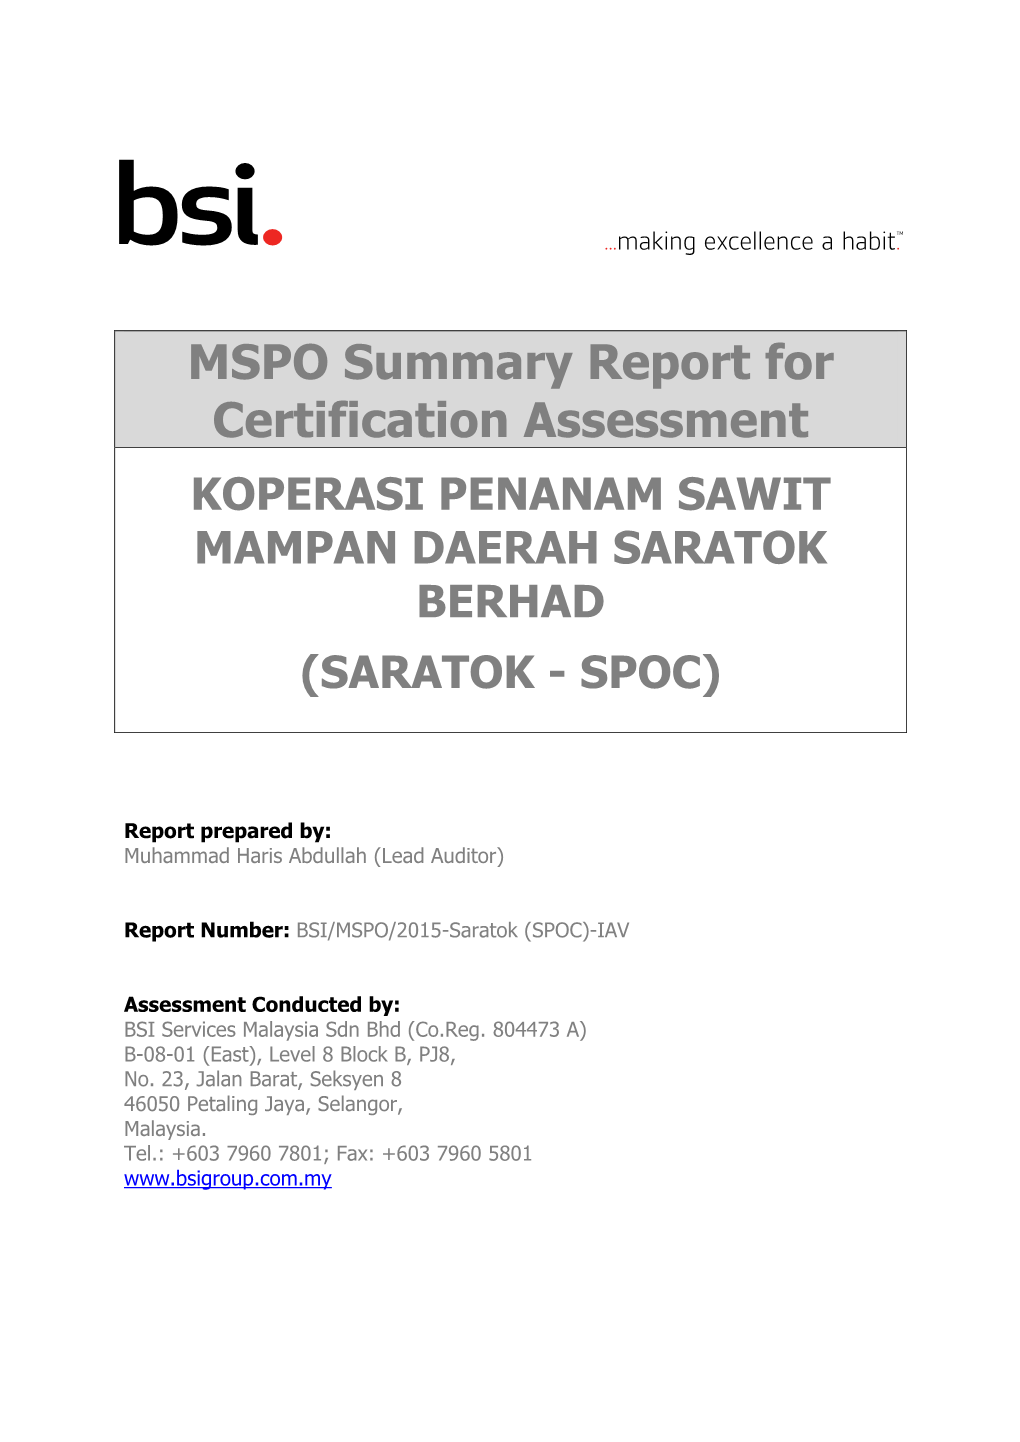 MSPO Summary Report for Certification Assessment KOPERASI PENANAM SAWIT MAMPAN DAERAH SARATOK BERHAD (SARATOK - SPOC)